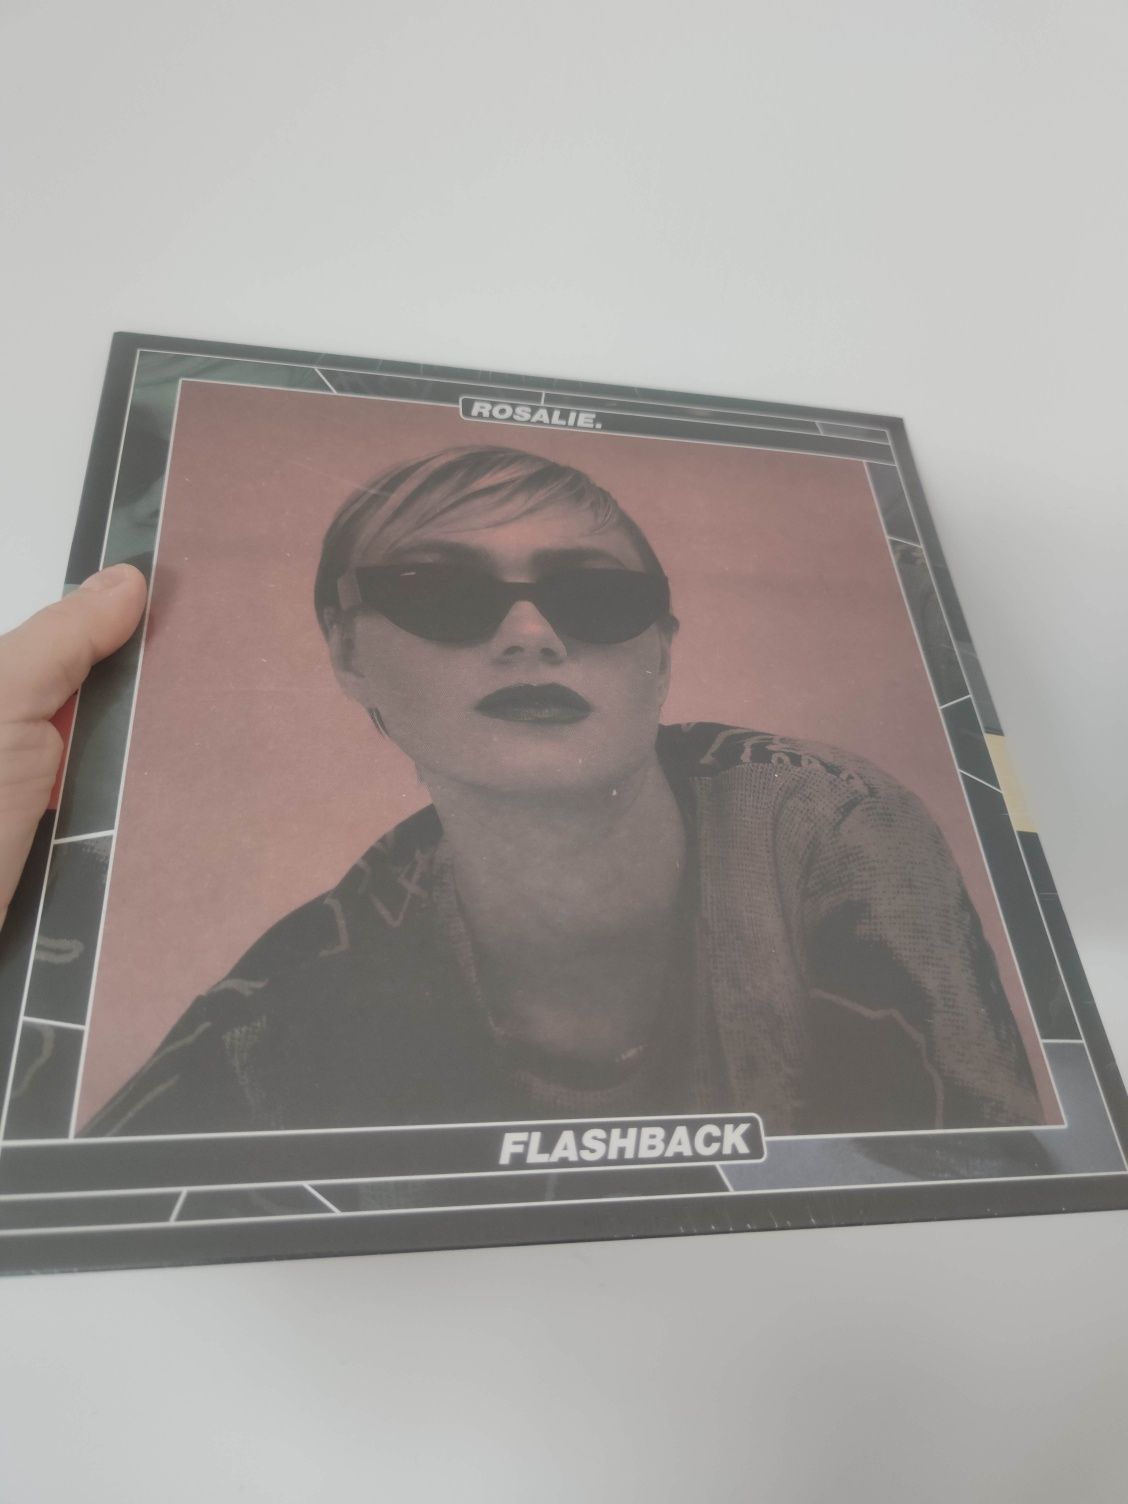 ROSALIE. - Flashback LP vinyl nowy w folii